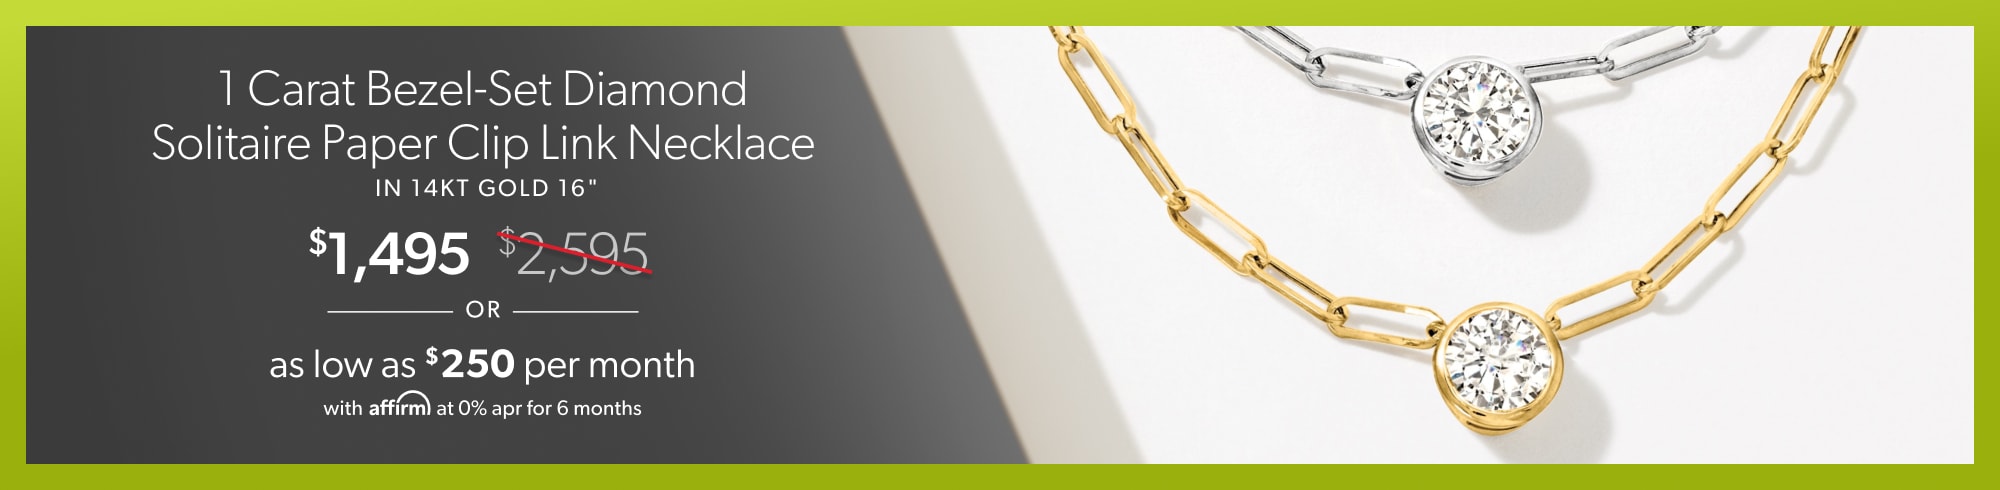 1 Carat Bezel-Set Diamond Solitaire Paper Clip Link Necklace in 14kt Gold